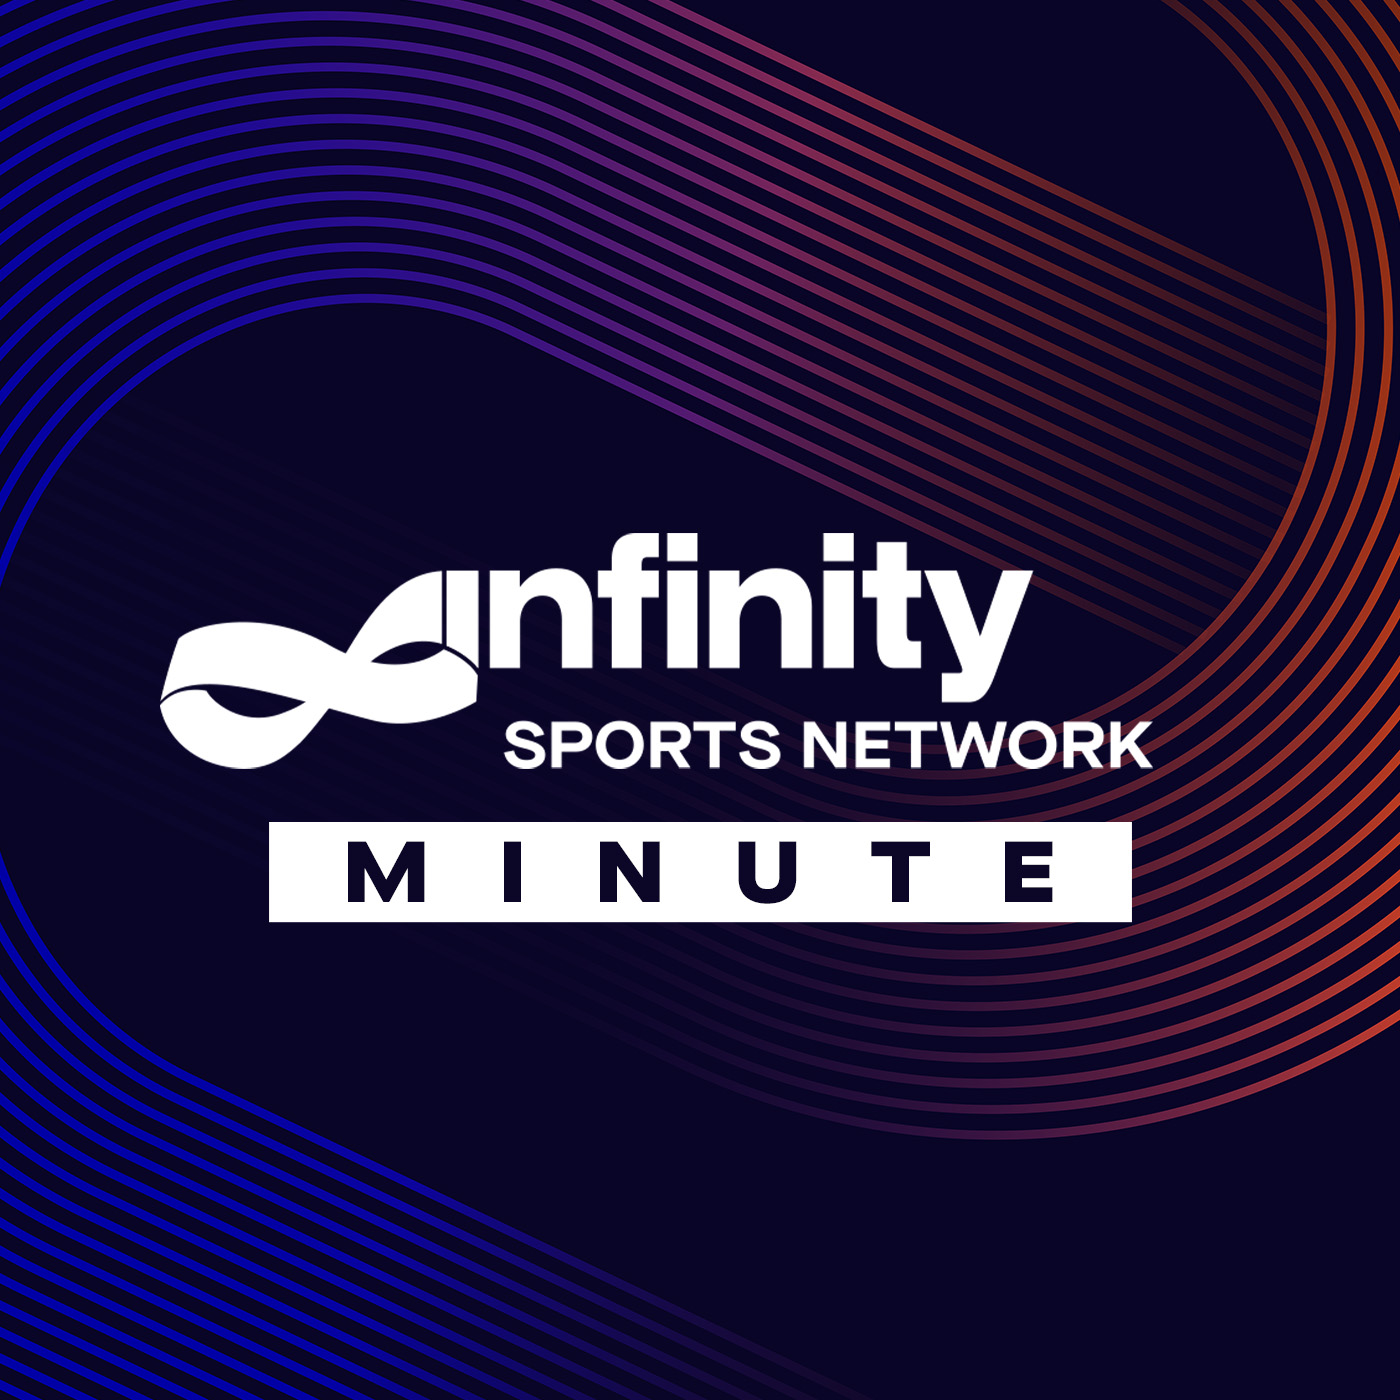 6-28 Andrew Perloff Sports Minute on Bronny James